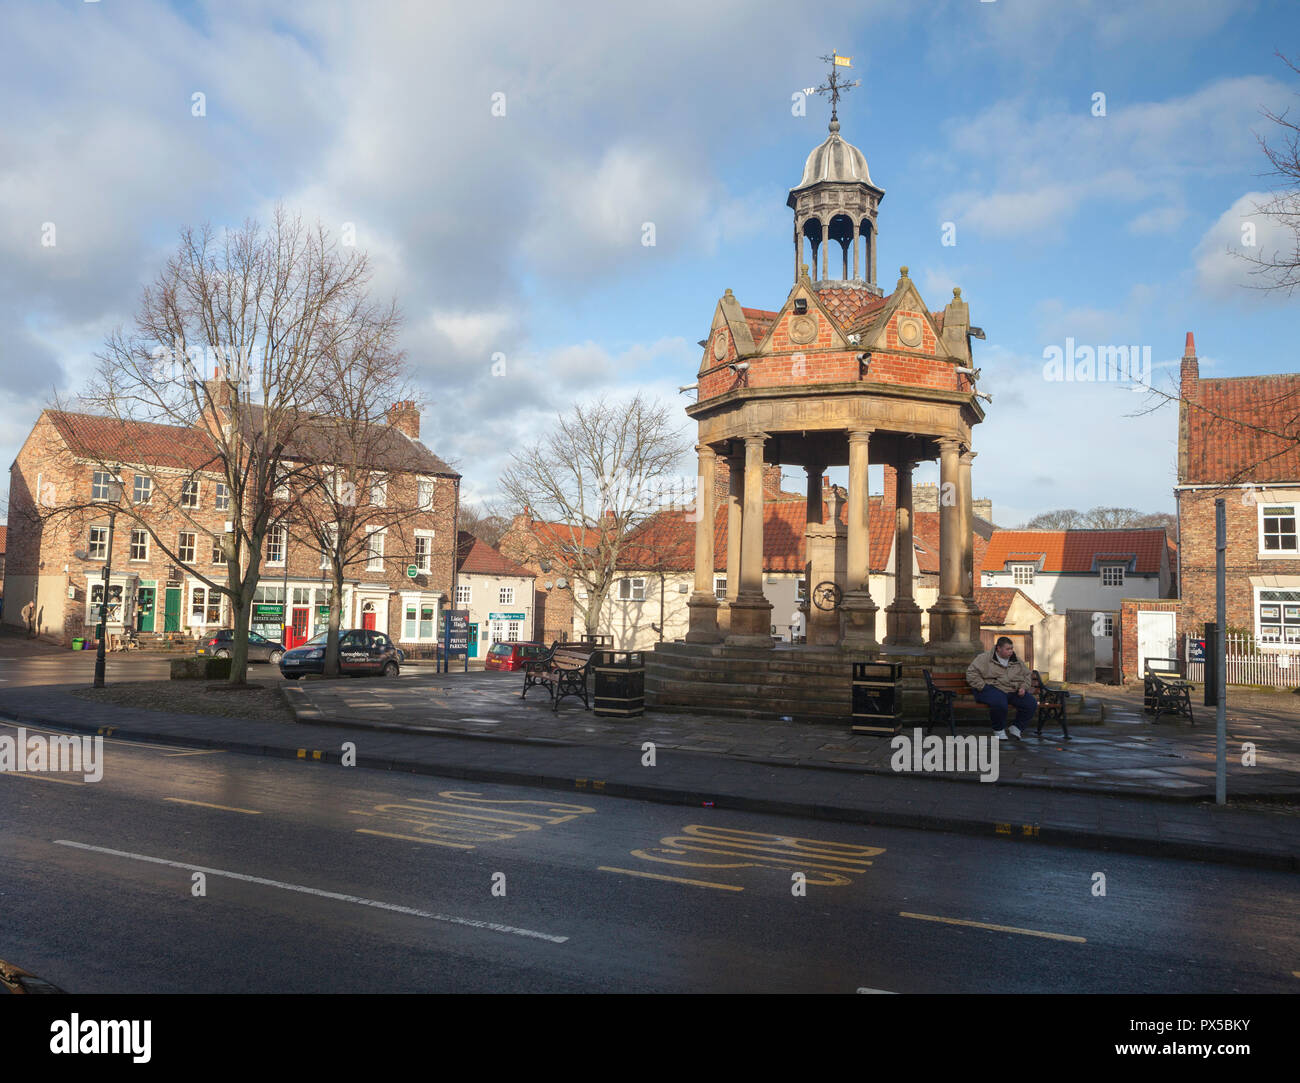 The Market Cross fountain in Boroughbridge, North Yorkshire Stock Photo